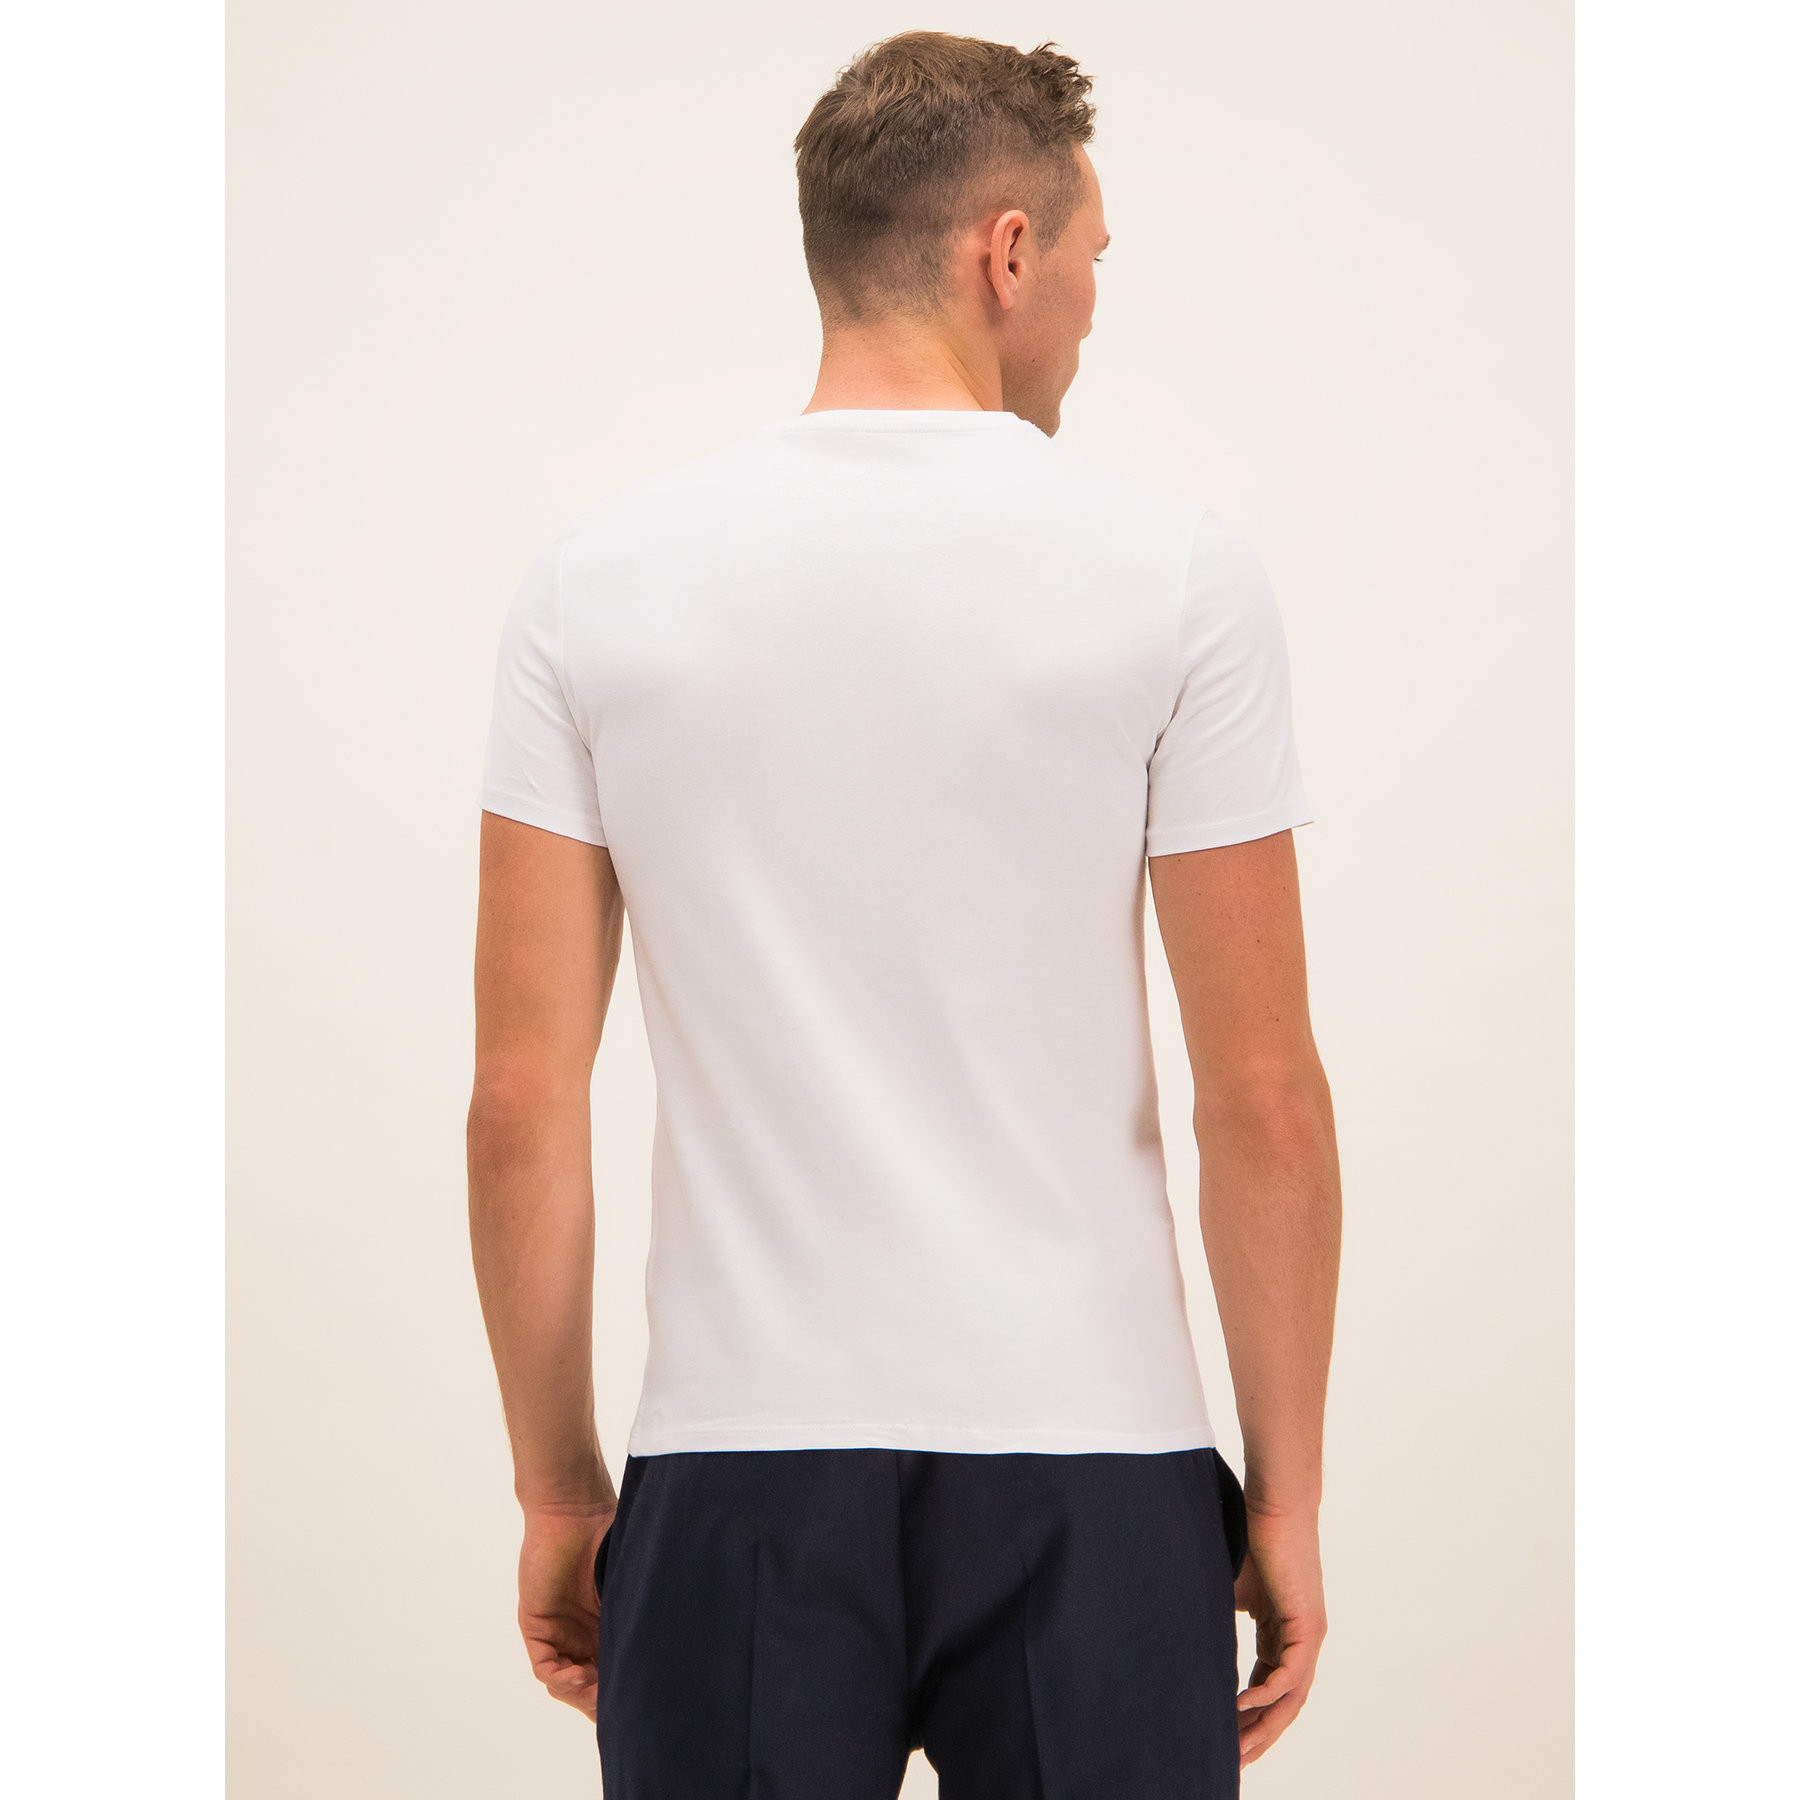 Pánské tričko bílá L model 17978194 - Guess